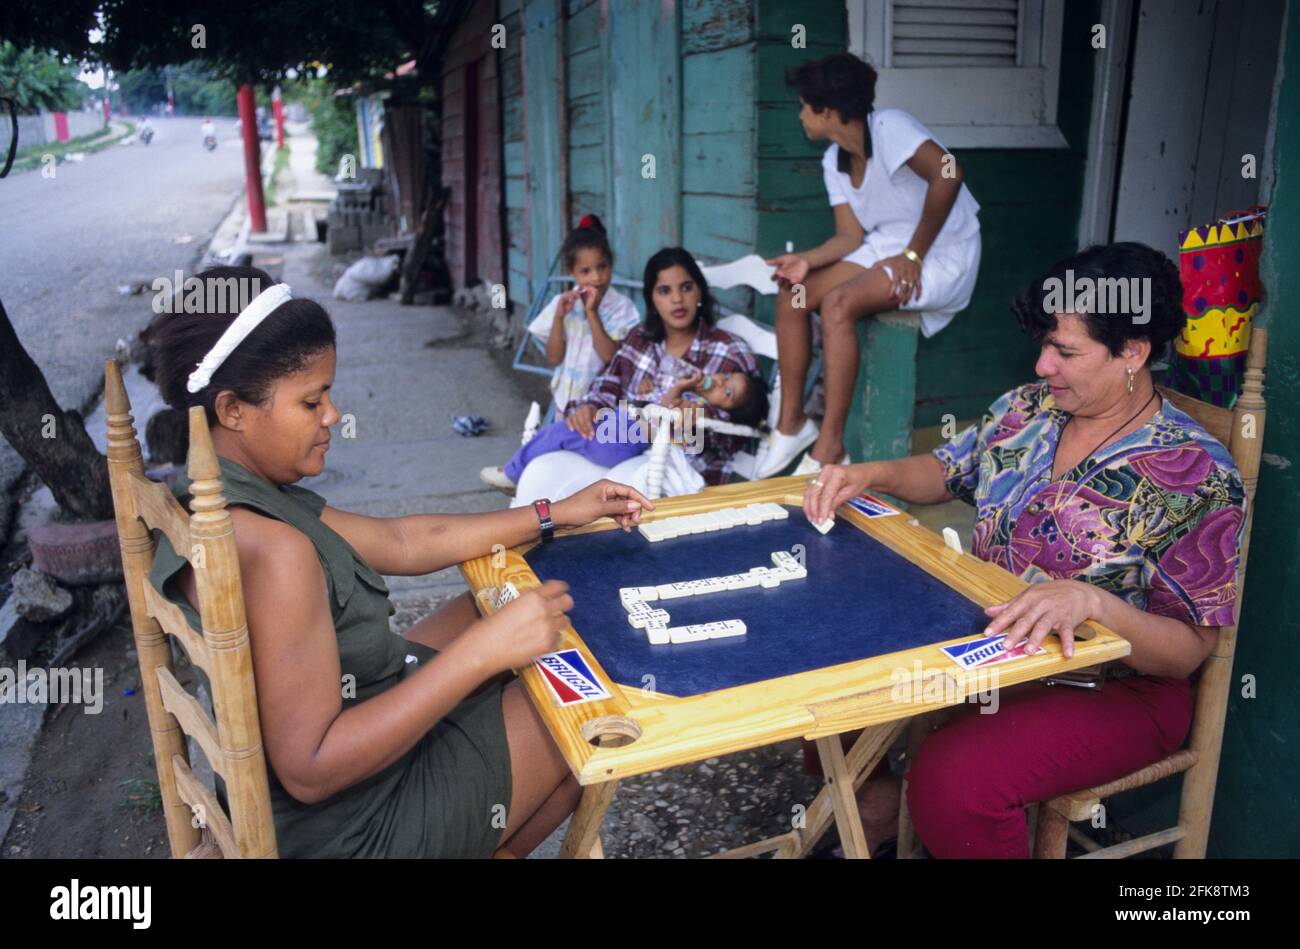 Dominikanische Republik, Straßenszene mit Domino-Spielerinnen, Santo Domingo Stock Photo